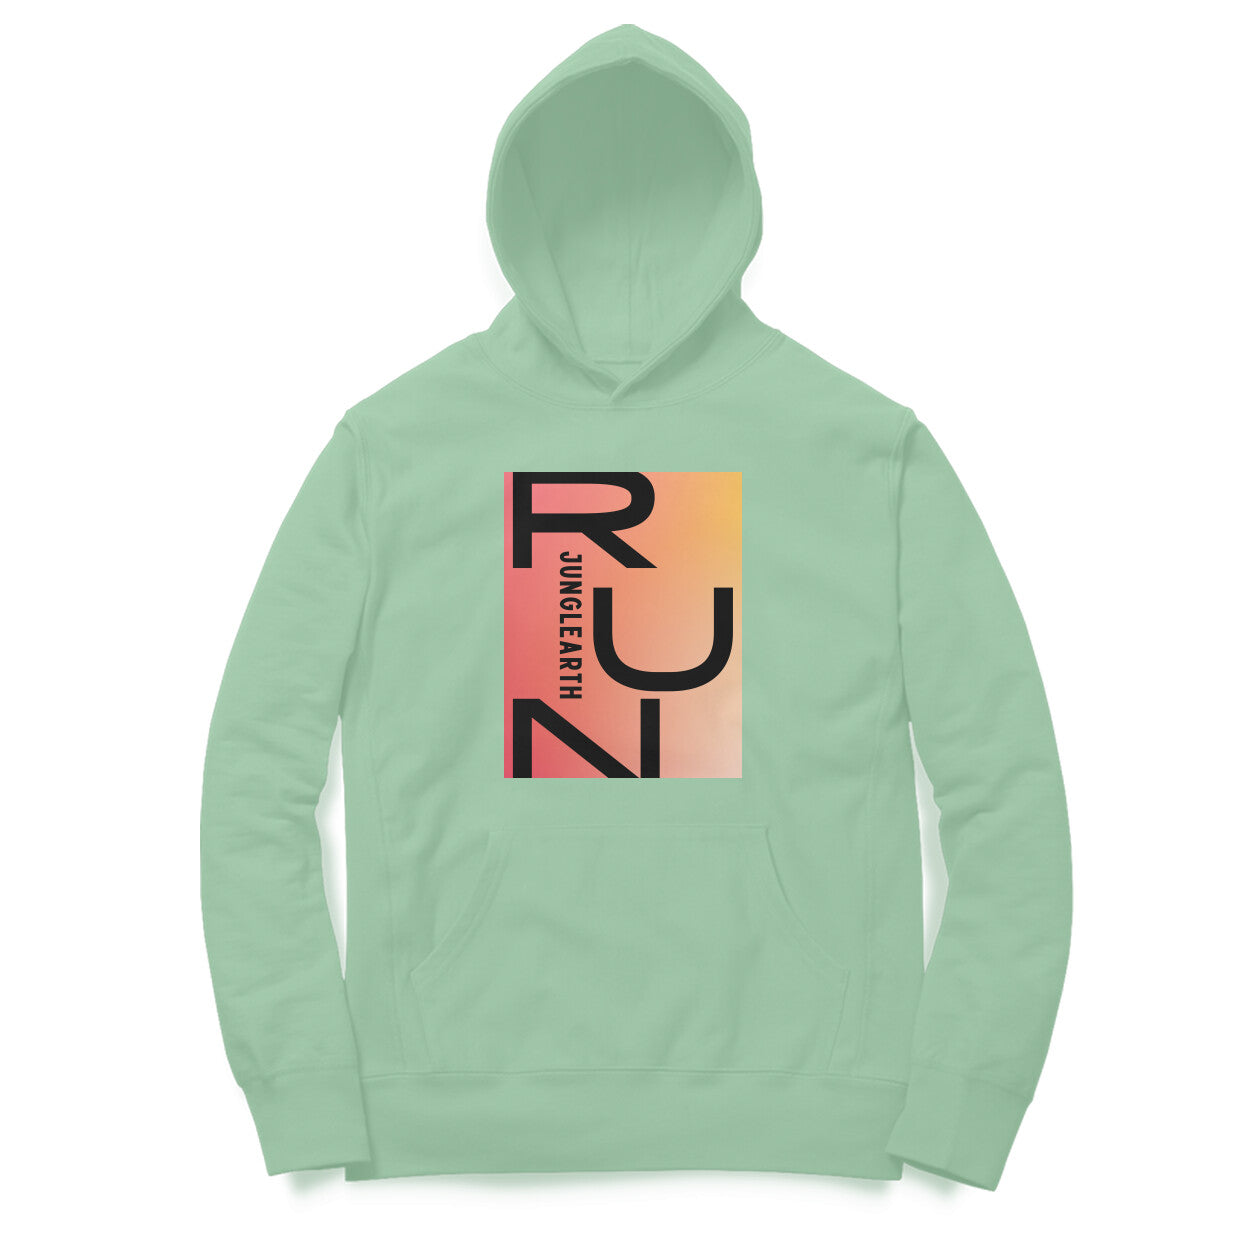 Run for freedom junglearth hoodie